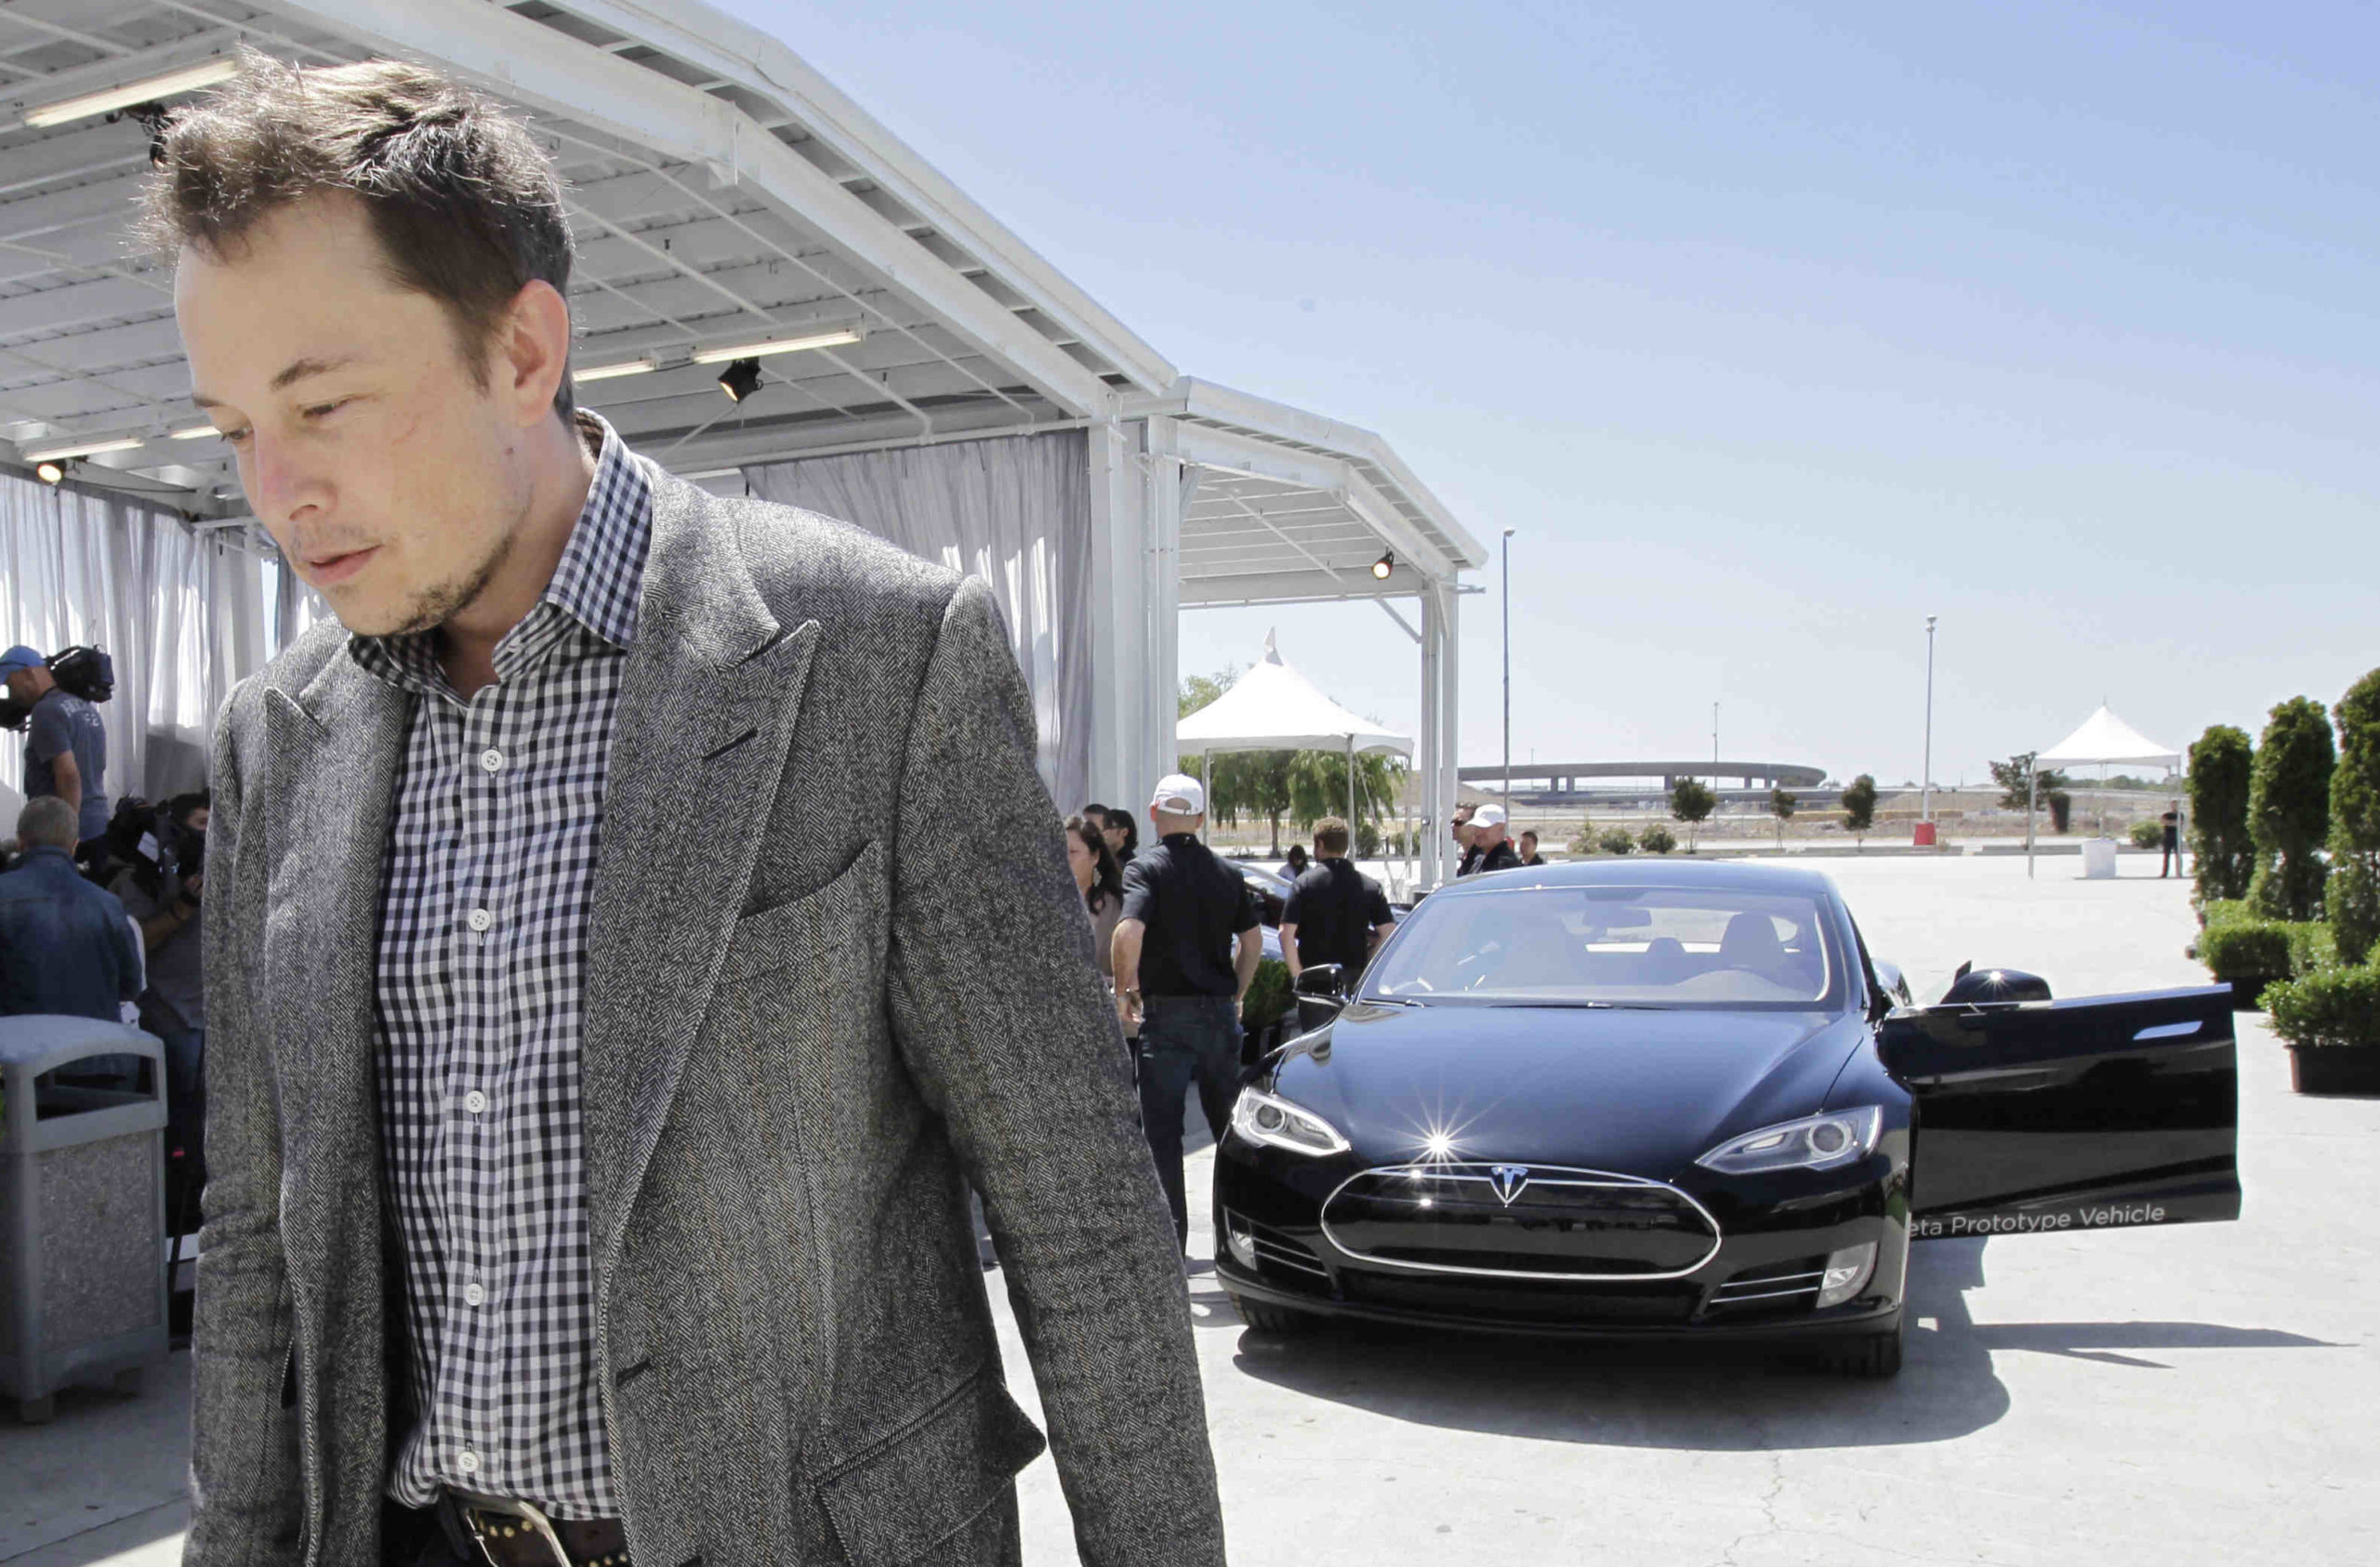 What is Elon musks favorite car?